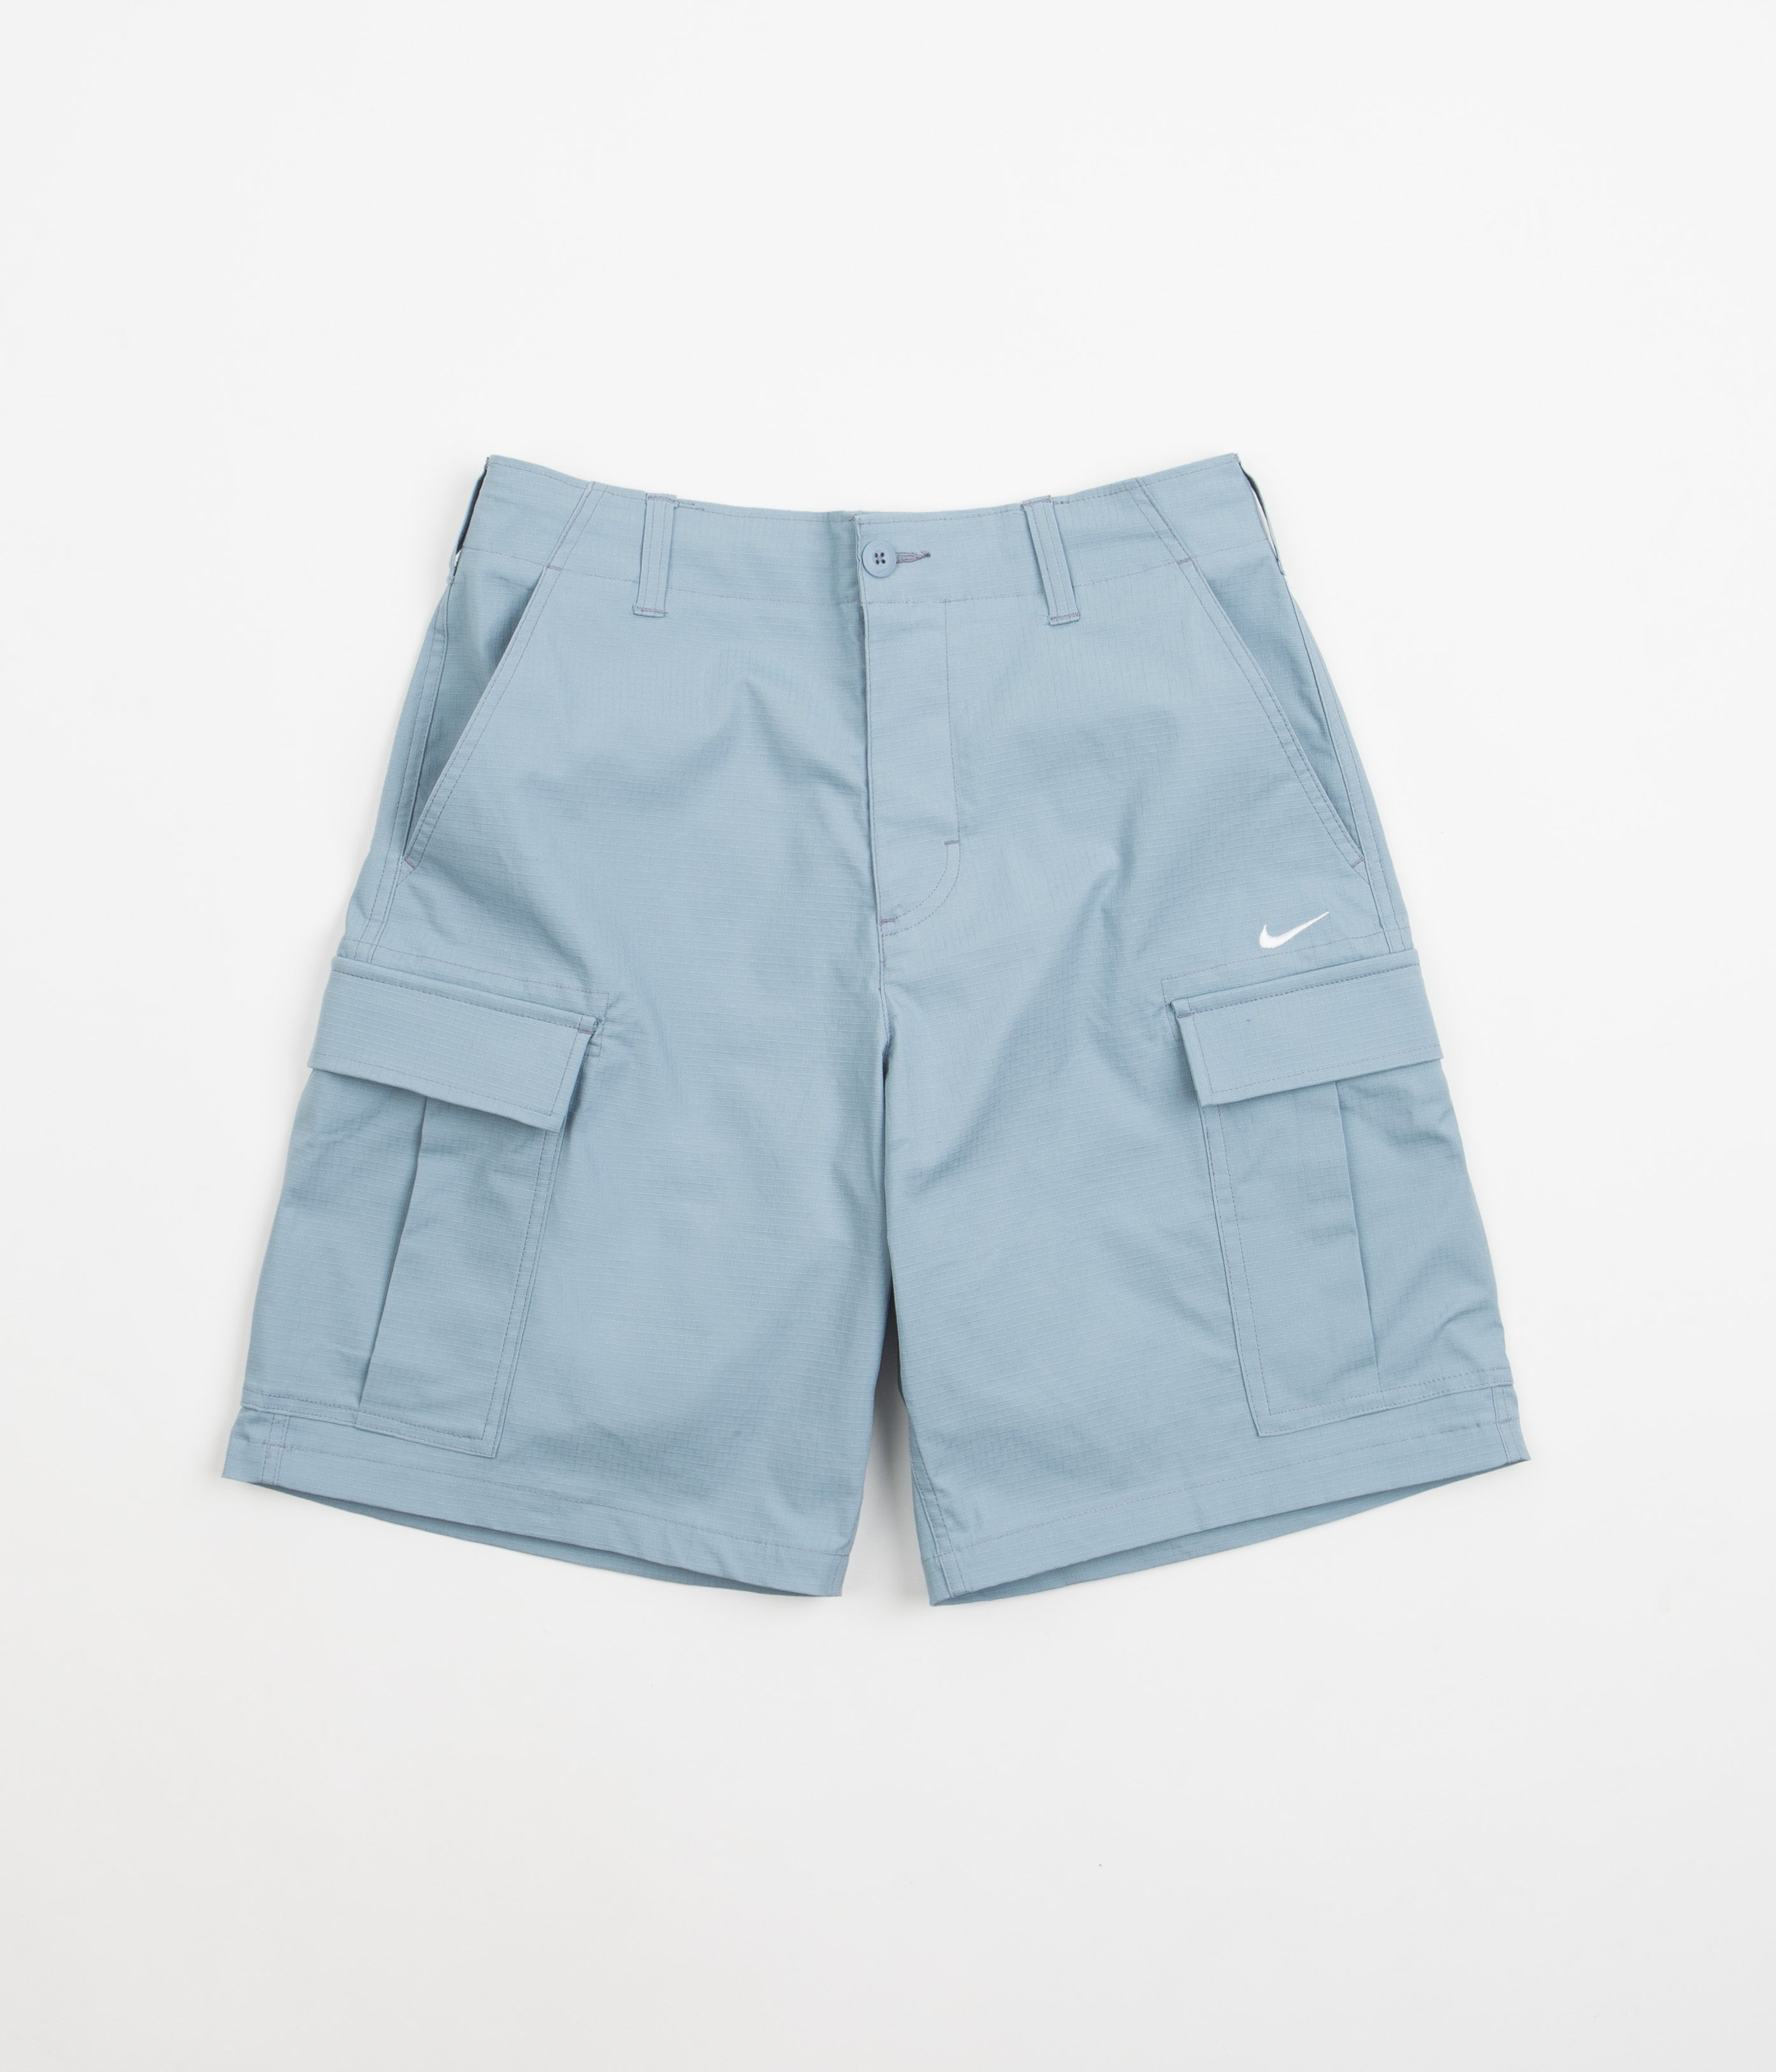 Real fondo Punta de flecha ultraviolet force jordans | Nike SB Cargo Shorts - nike sb gray tank blue  jeans pants for women - BioenergylistsShops